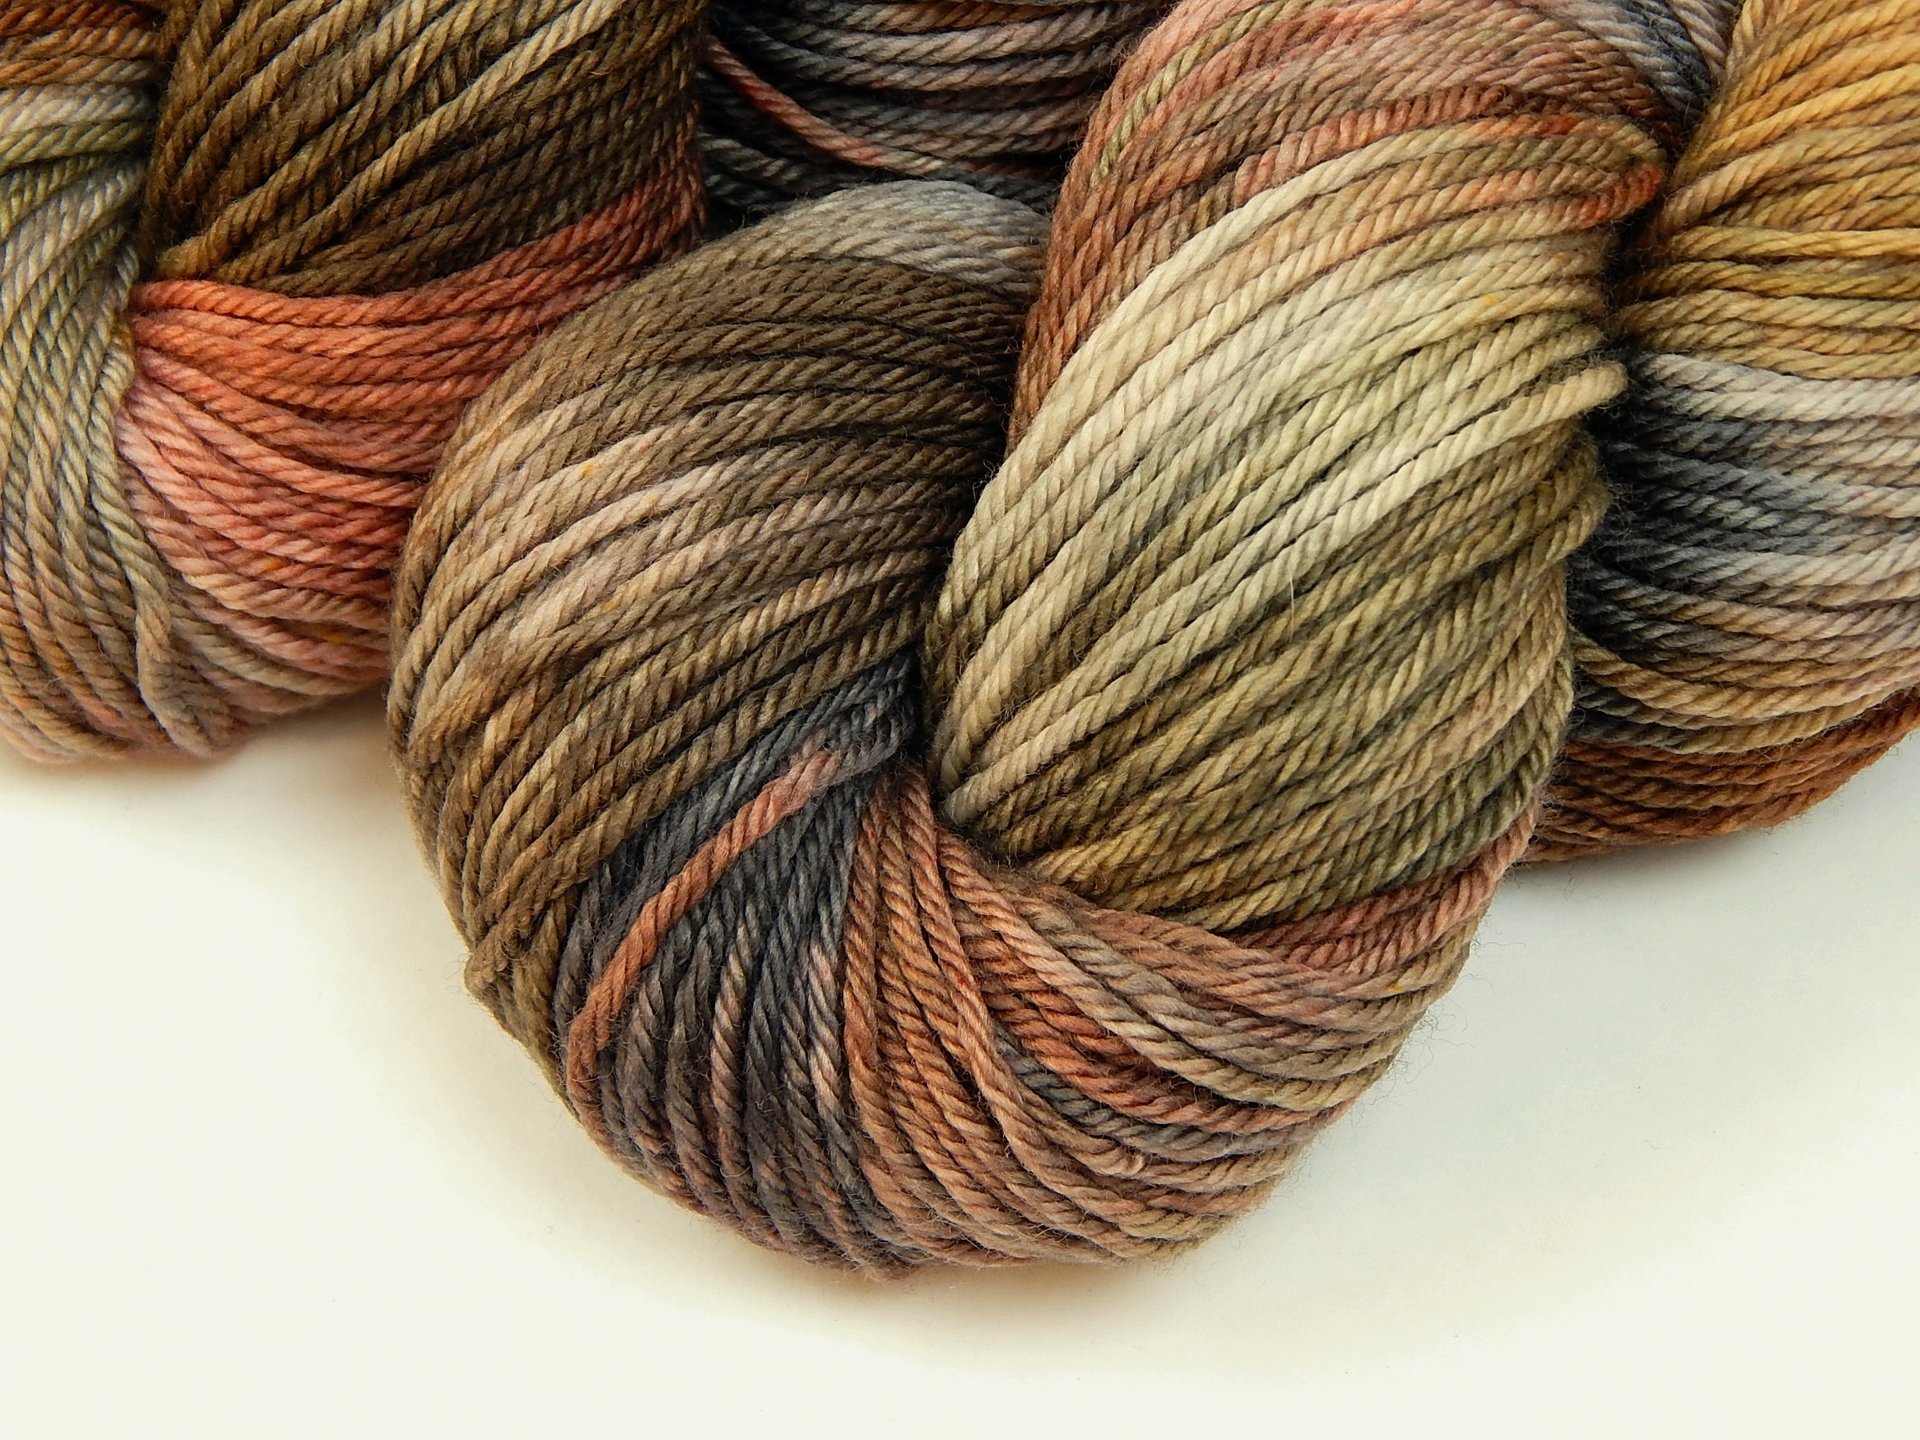 Worsted Weight Hand Dyed Yarn, 100% Superwash Merino Wool - Potluck Greys & Browns - Indie Dyer OOAK Crochet Knitting Yarn, Earthtones Gray Bark Brick